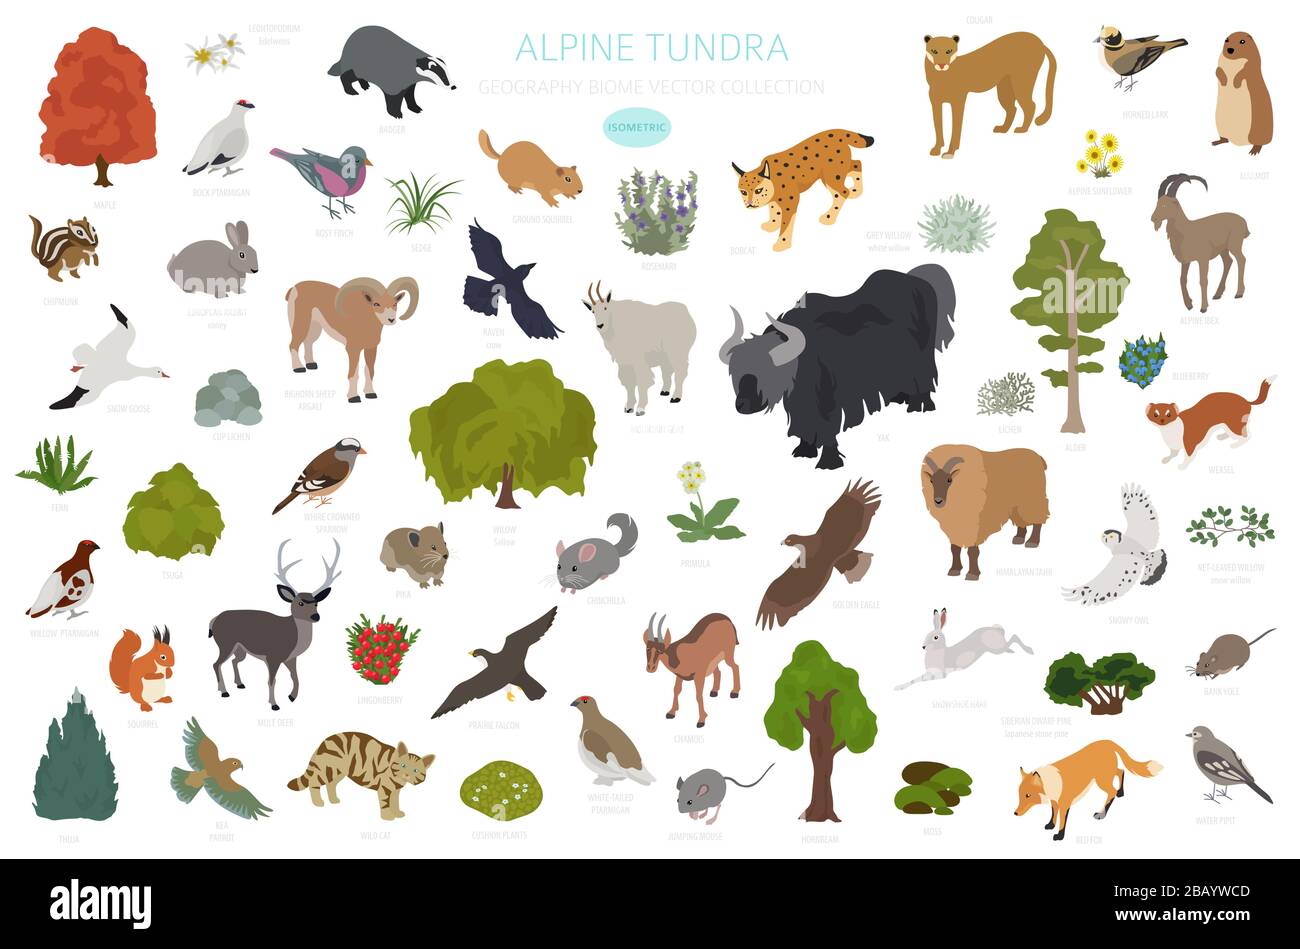 Apine Tundra Biome Natural Region Isometric Infographic Terrestrial Ecosystem World Map Animals Birds And Plants Design Set Vector Illustration Stock Vector Image Art Alamy